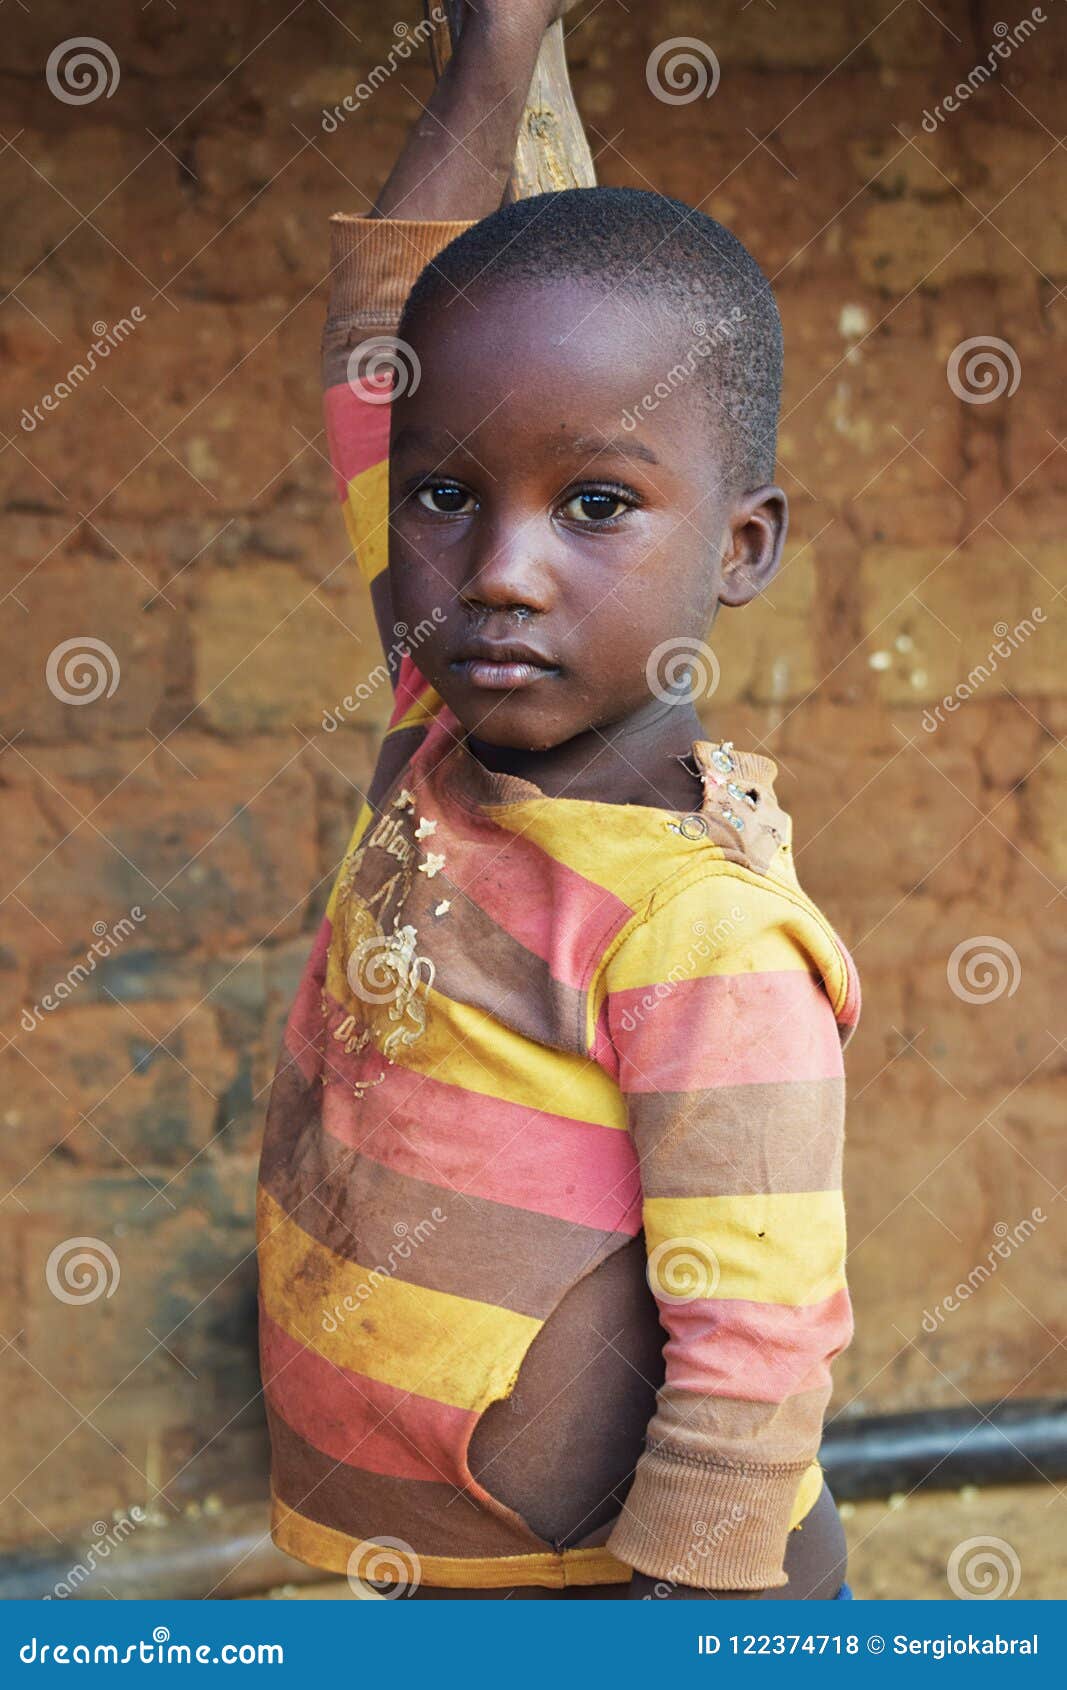 boy from the village of mahipa in ocua